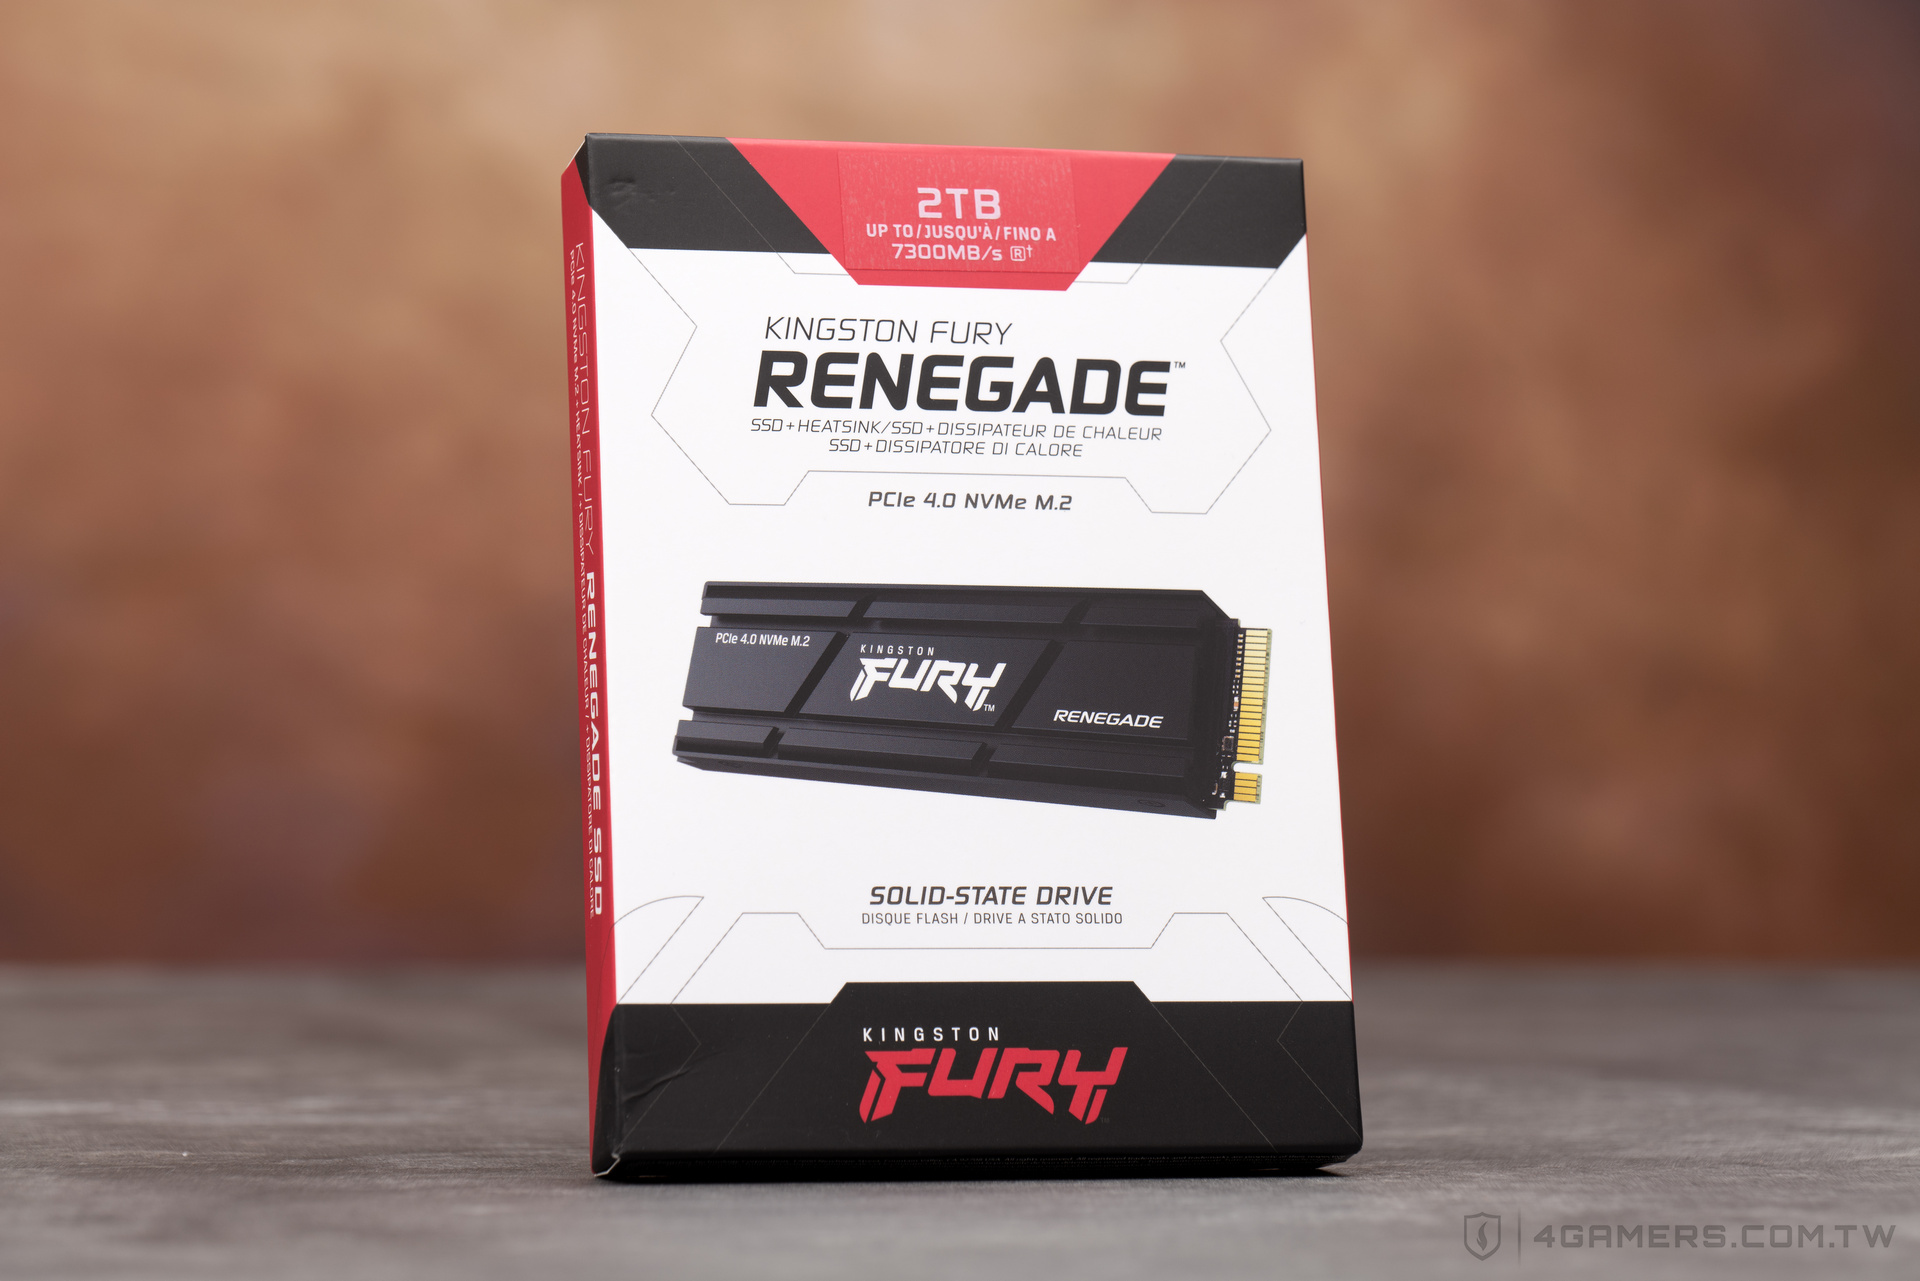 Kingston FURY Renegade PCIe 4.0 NVMe M.2 SSD with Heatsink